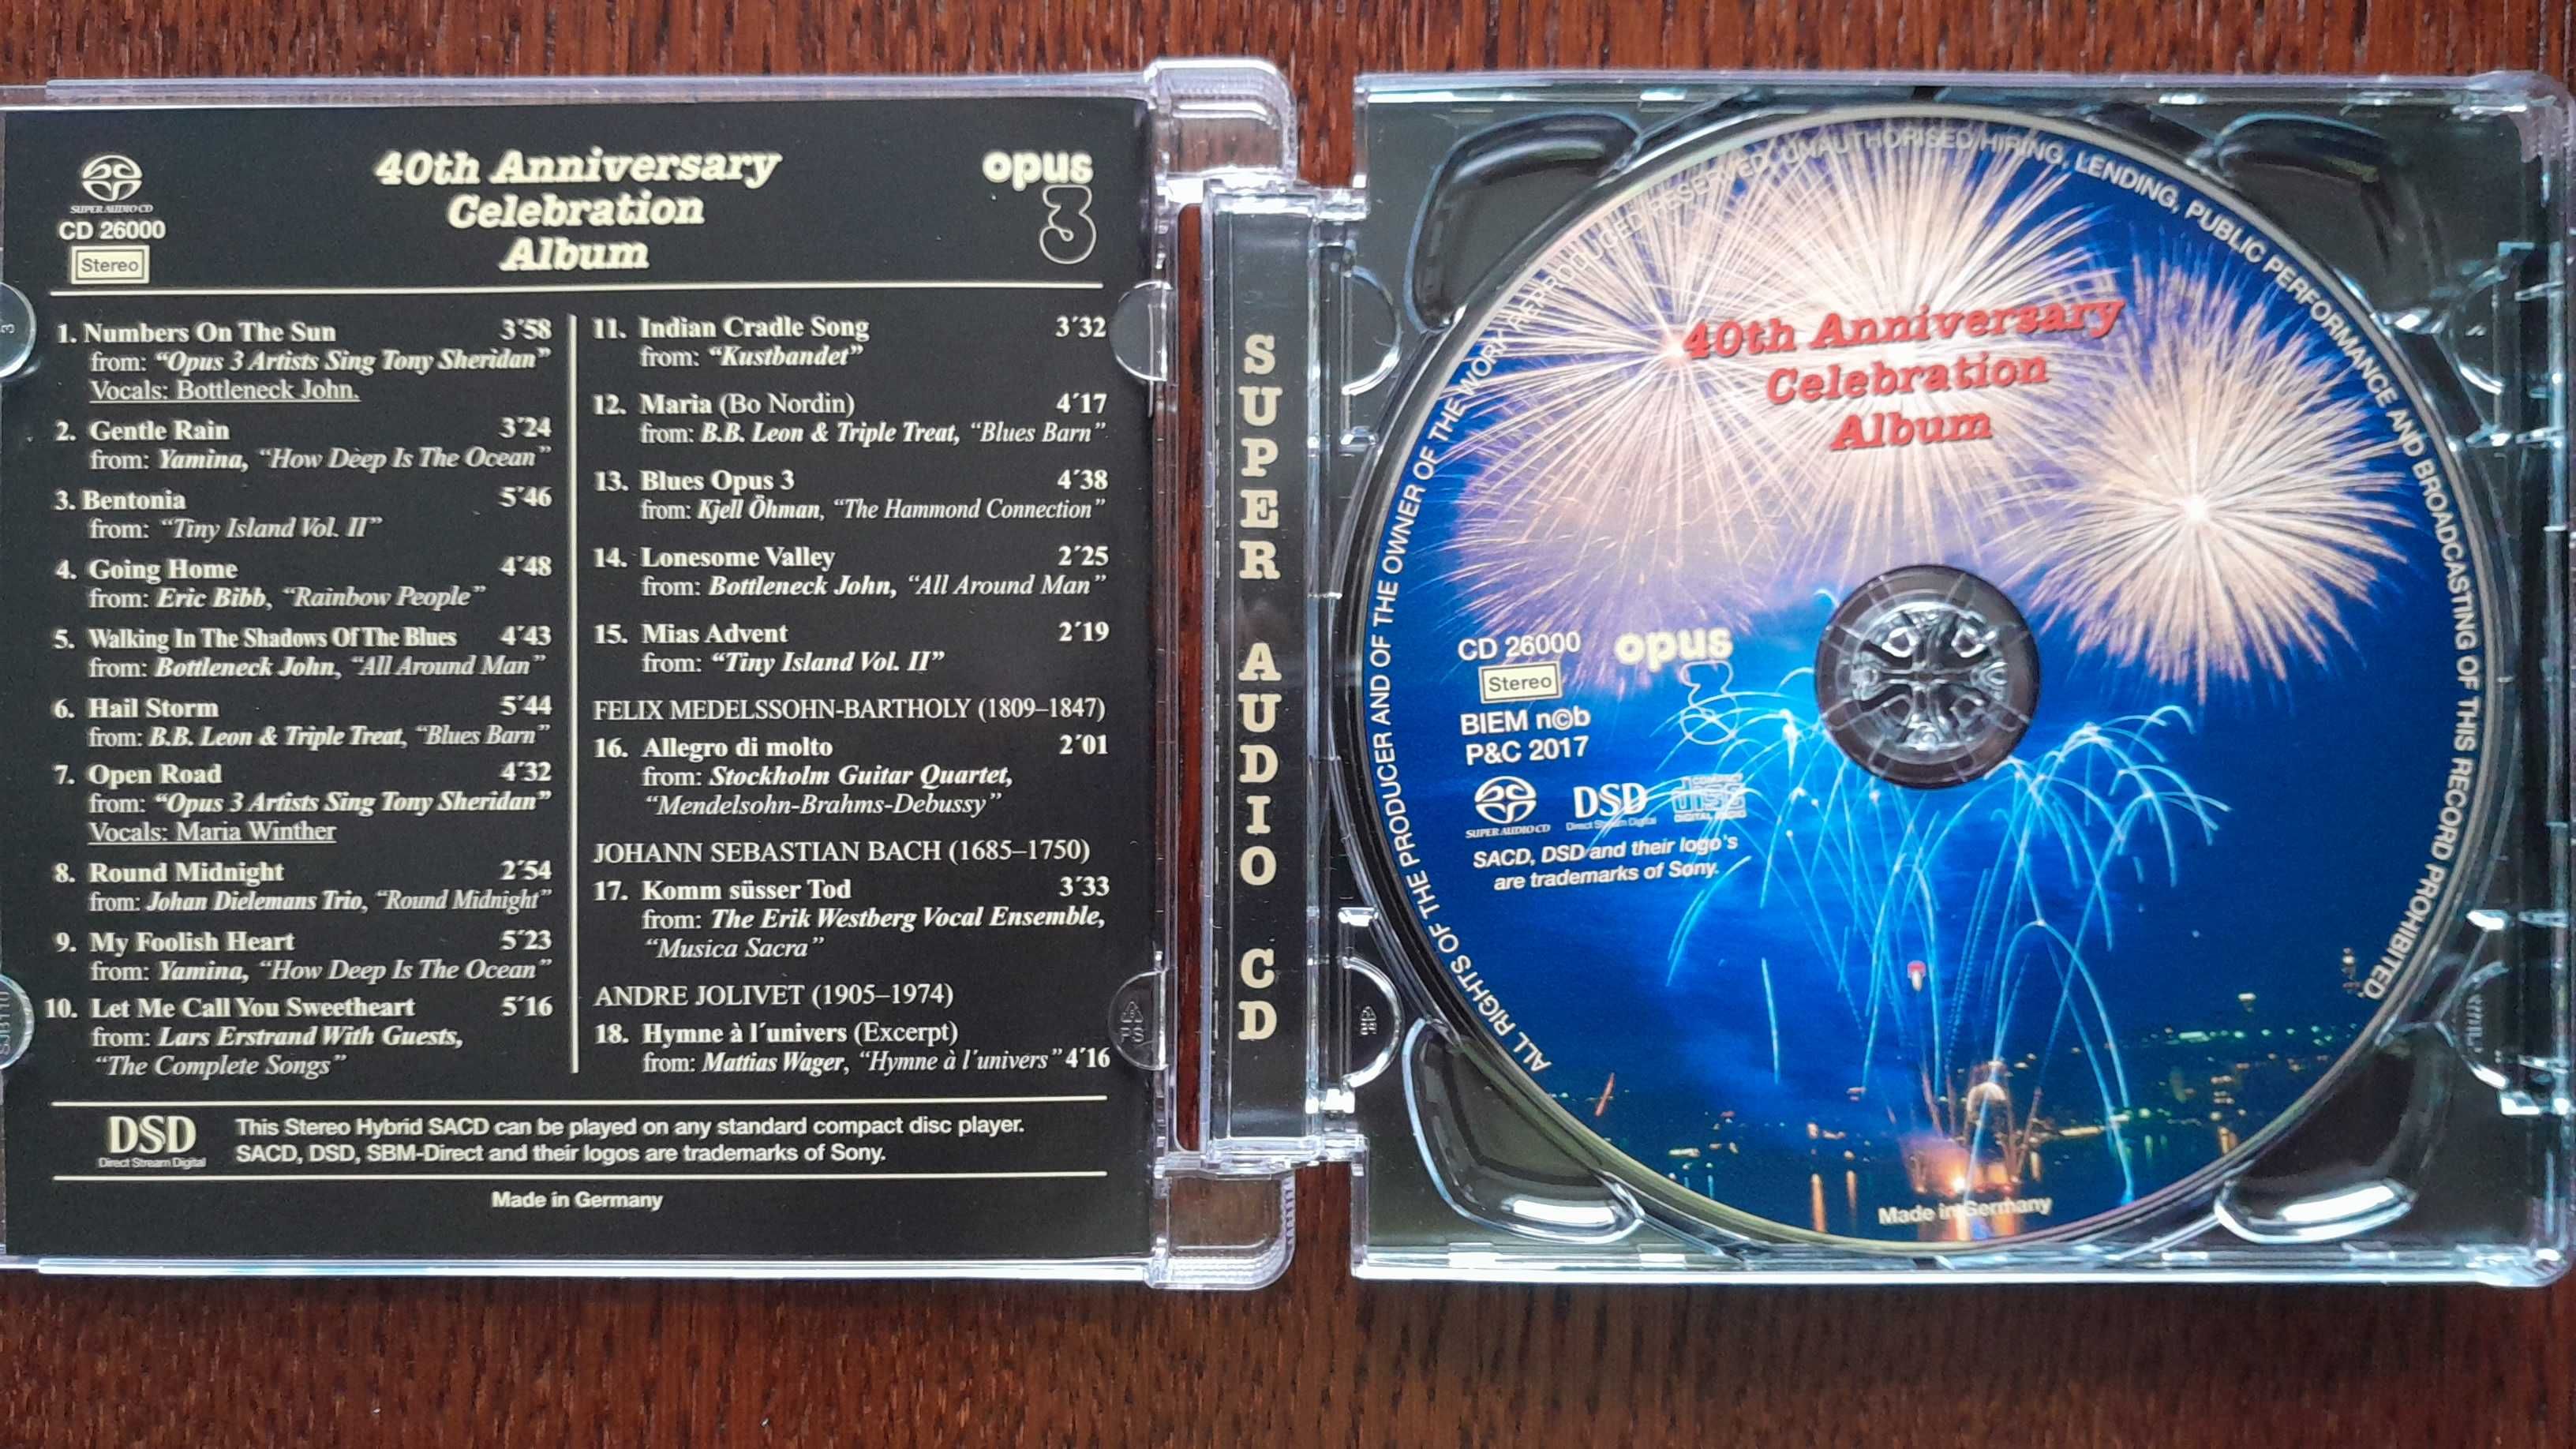 SACD 40th Anniversary Celebration Album Various Artists